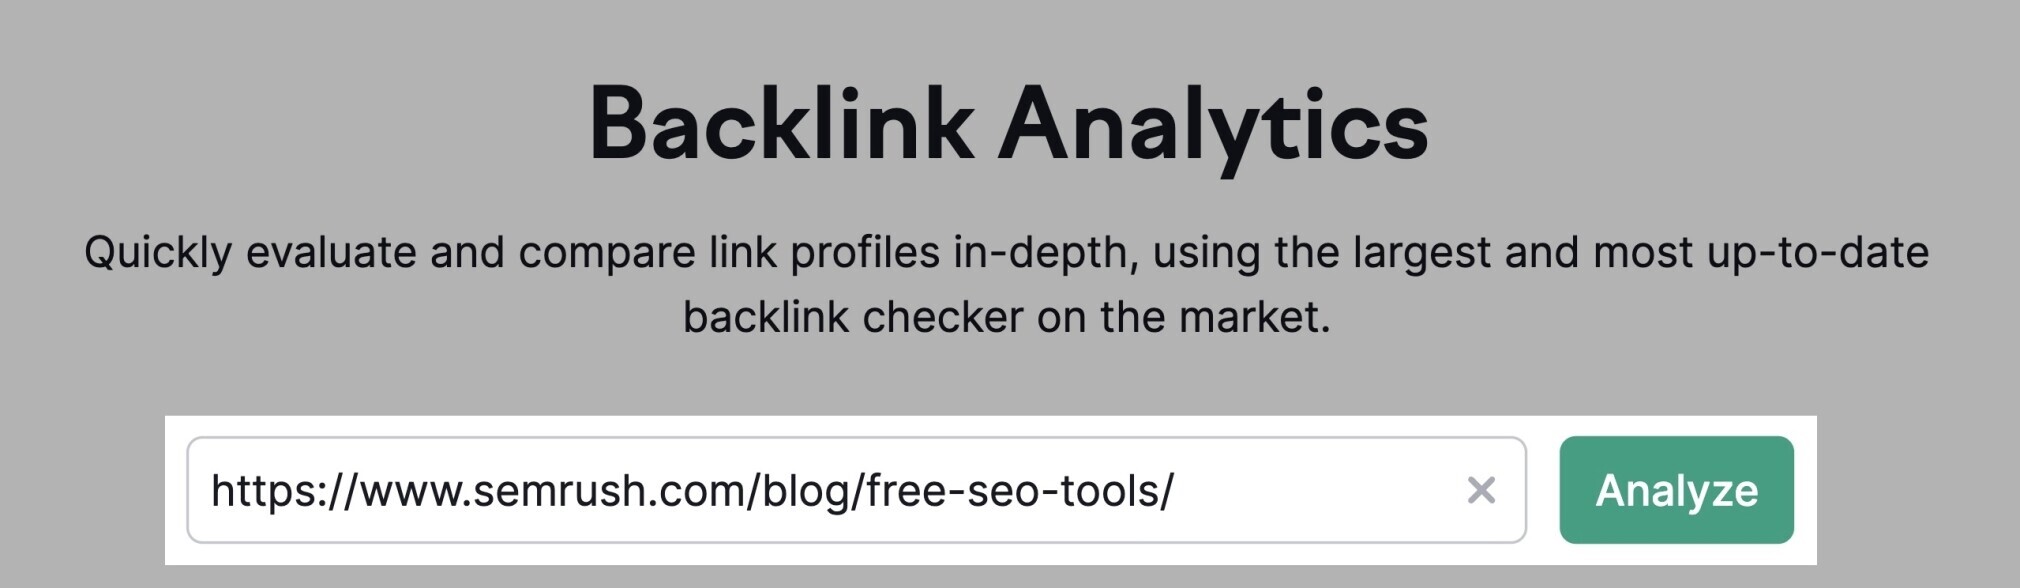 blog backlink analytics tool